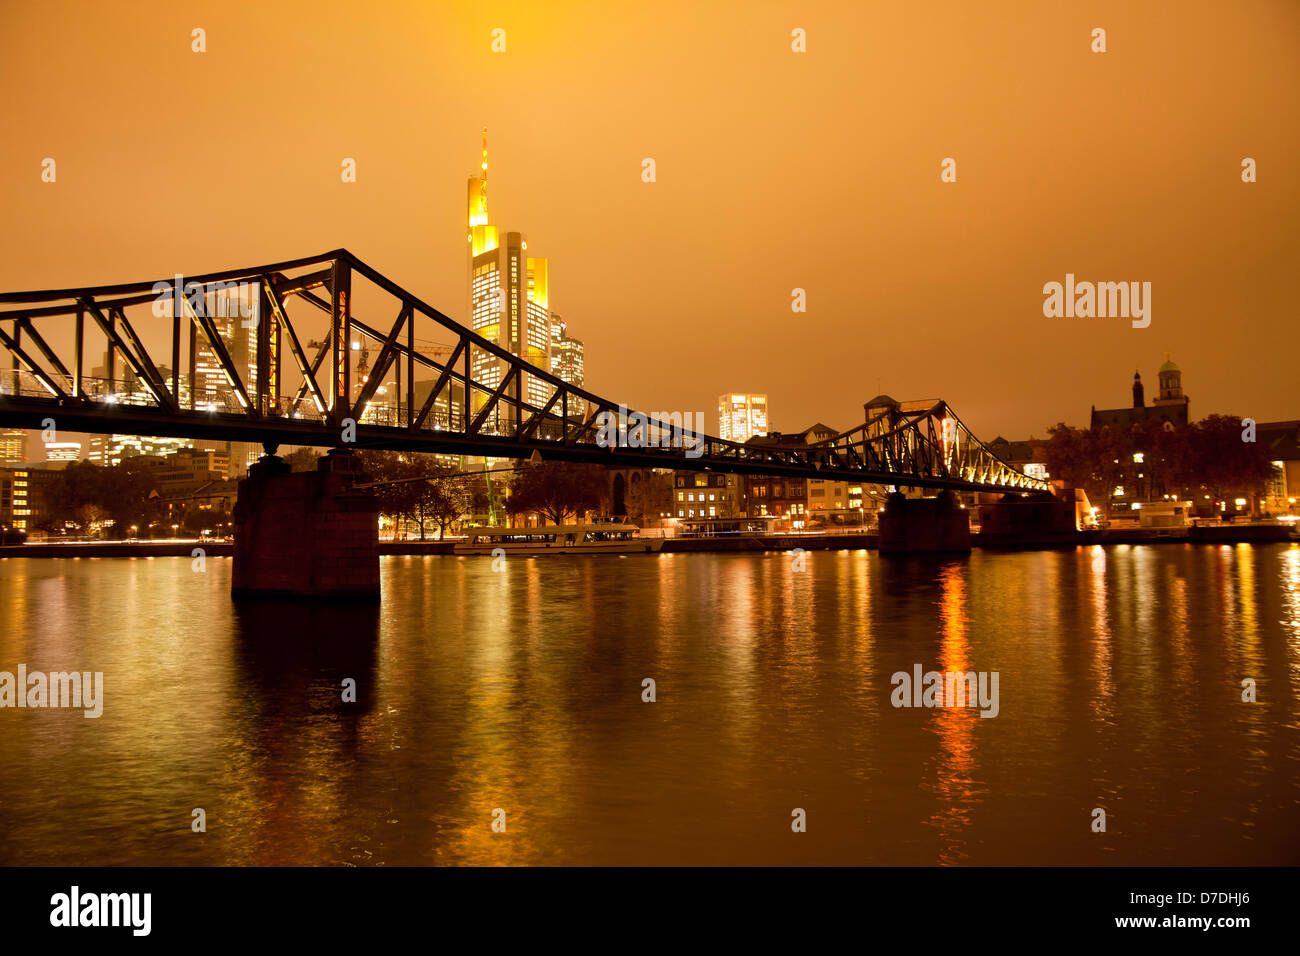 Eiserner Steg Bruecke, bridge over the Main river with the illuminated skyline of Frankfurt at dusk, Frankfurt am Main, Hesse, G Stock Photo